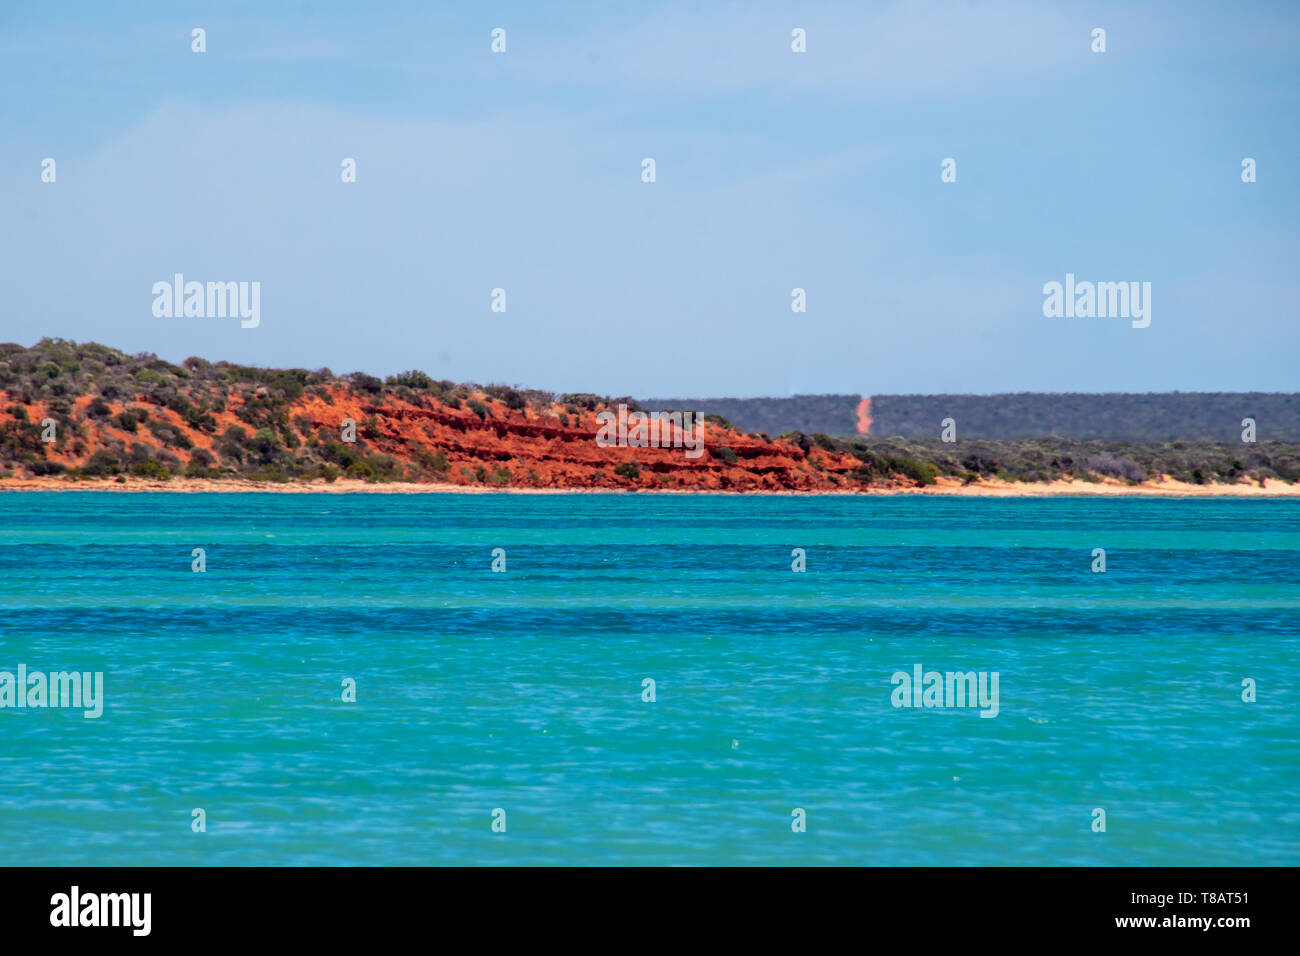 Roter Sand Stone Cliff am Strand von Shark Bay Australien Stockfoto